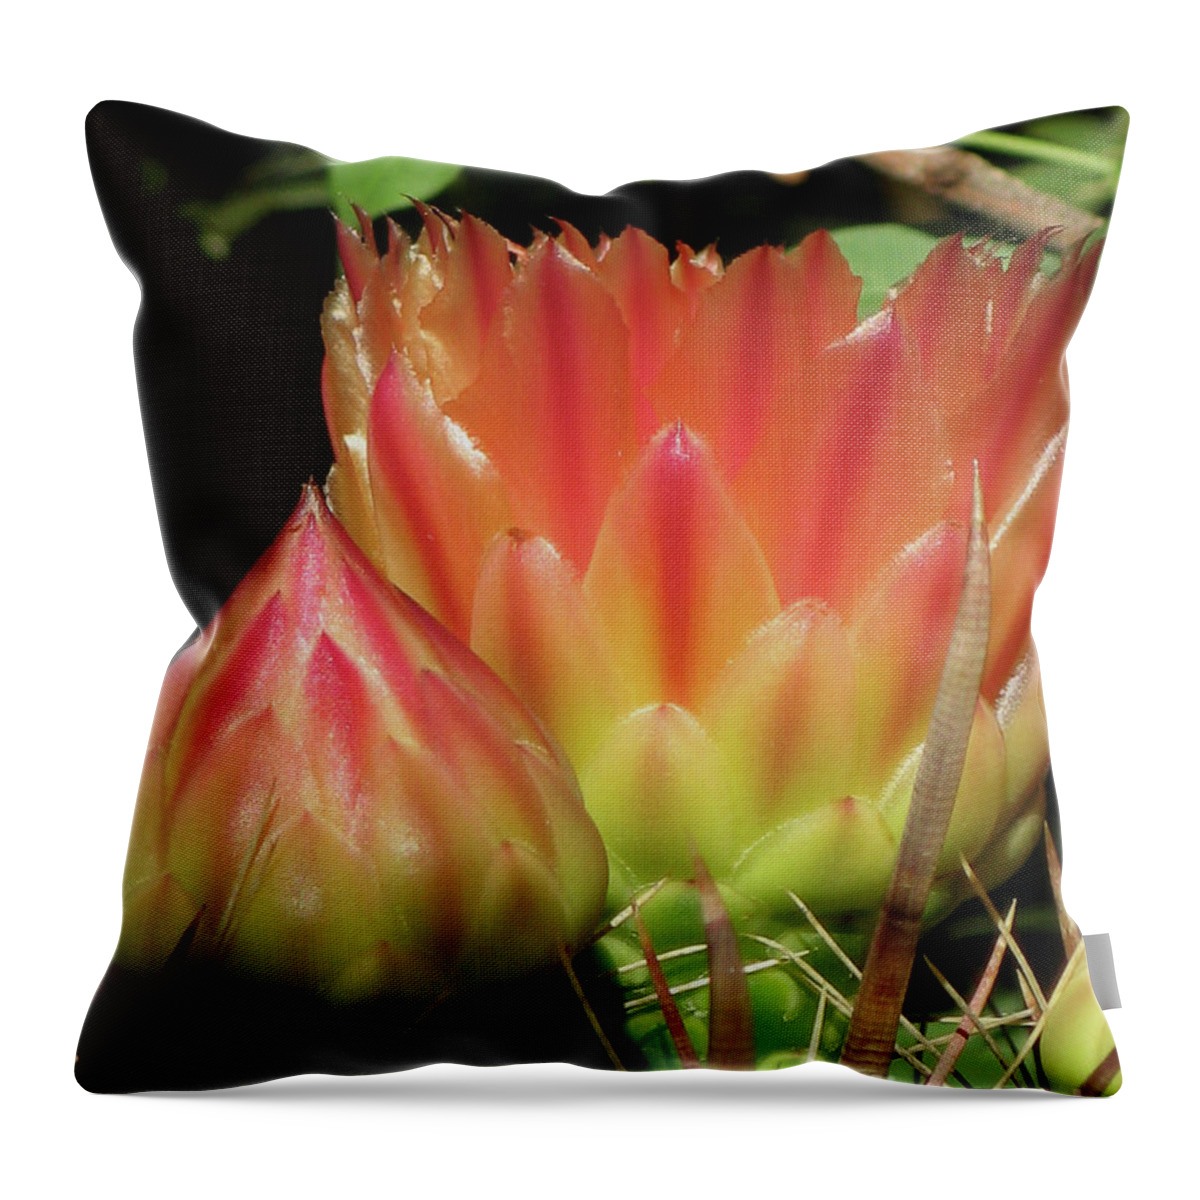 Floral Throw Pillow featuring the photograph Desert Bloom by Rebecca Langen